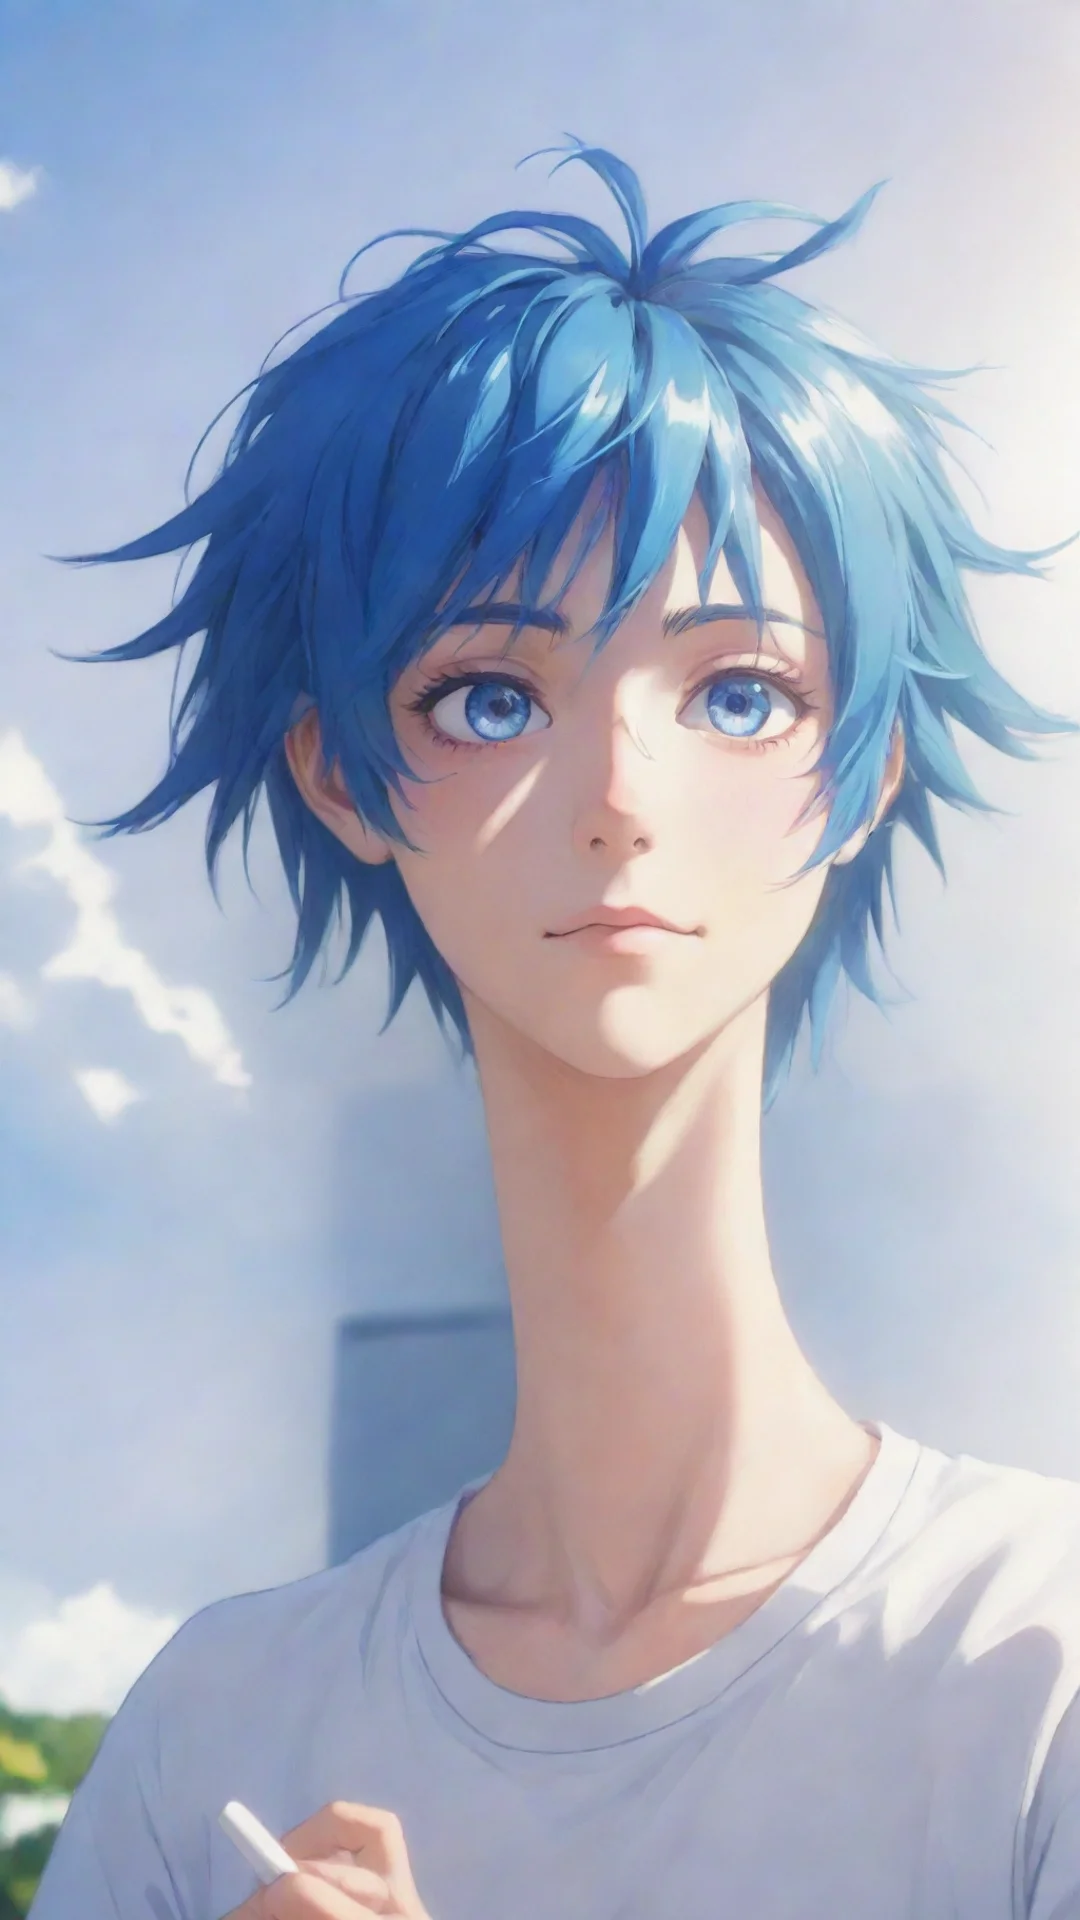 aiartstation art math sunlight simple anime boy blue hair bright blue eyes confident engaging wow 3 tall